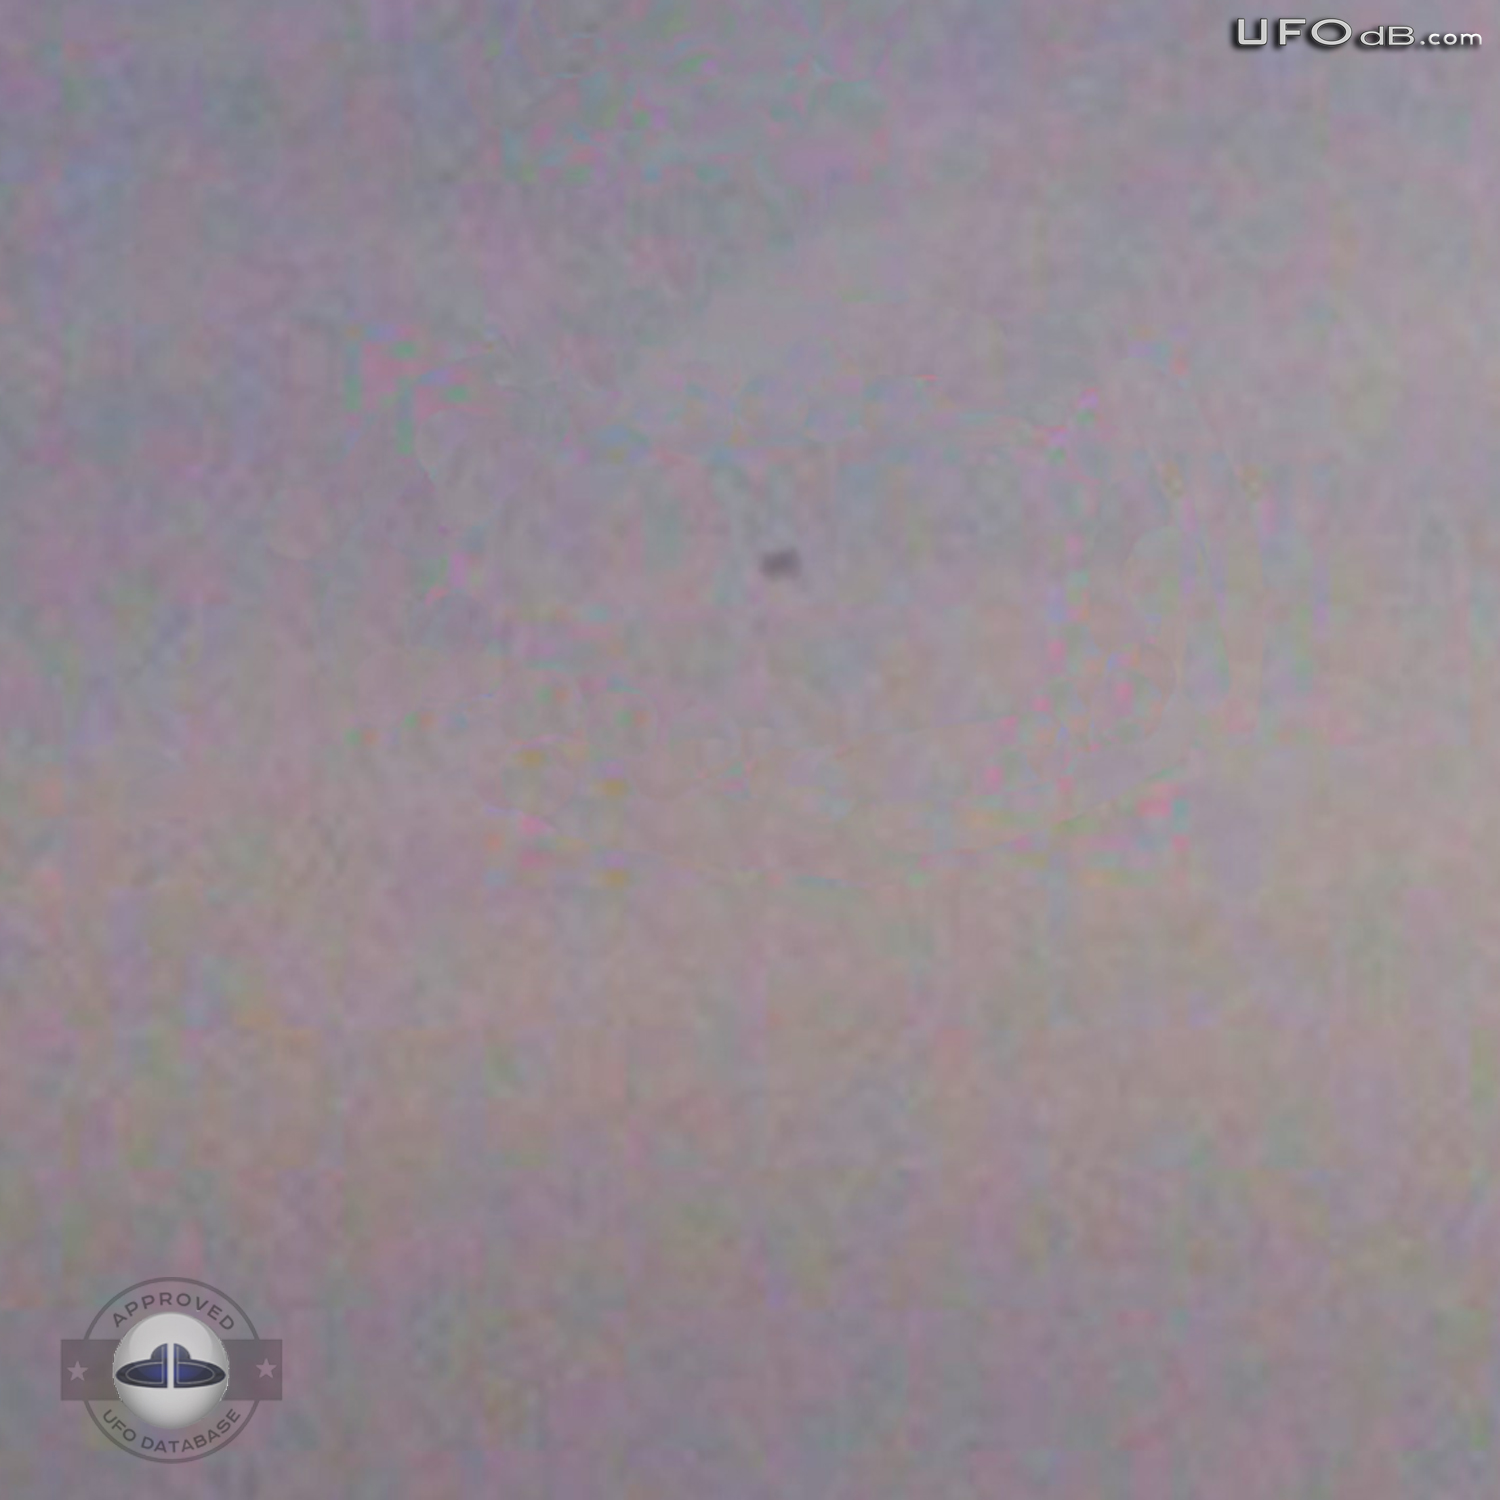 Distant Dark UFO over Alexandria, Virginia | USA | February 20 2011 UFO Picture #292-2